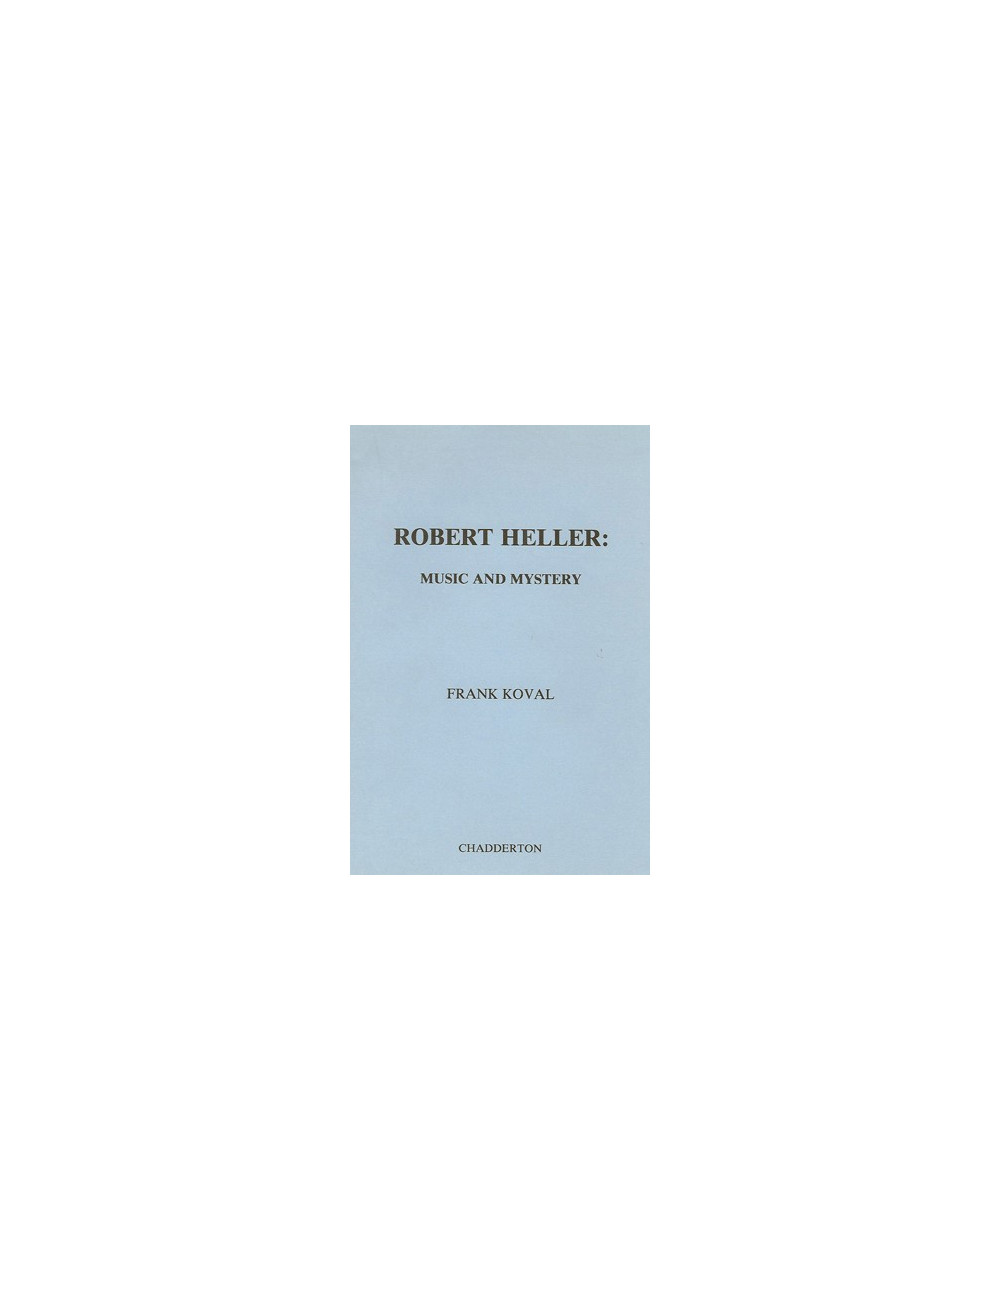 ROBERT HELLER : MUSIC AND MYSTERY (Frank Koval)